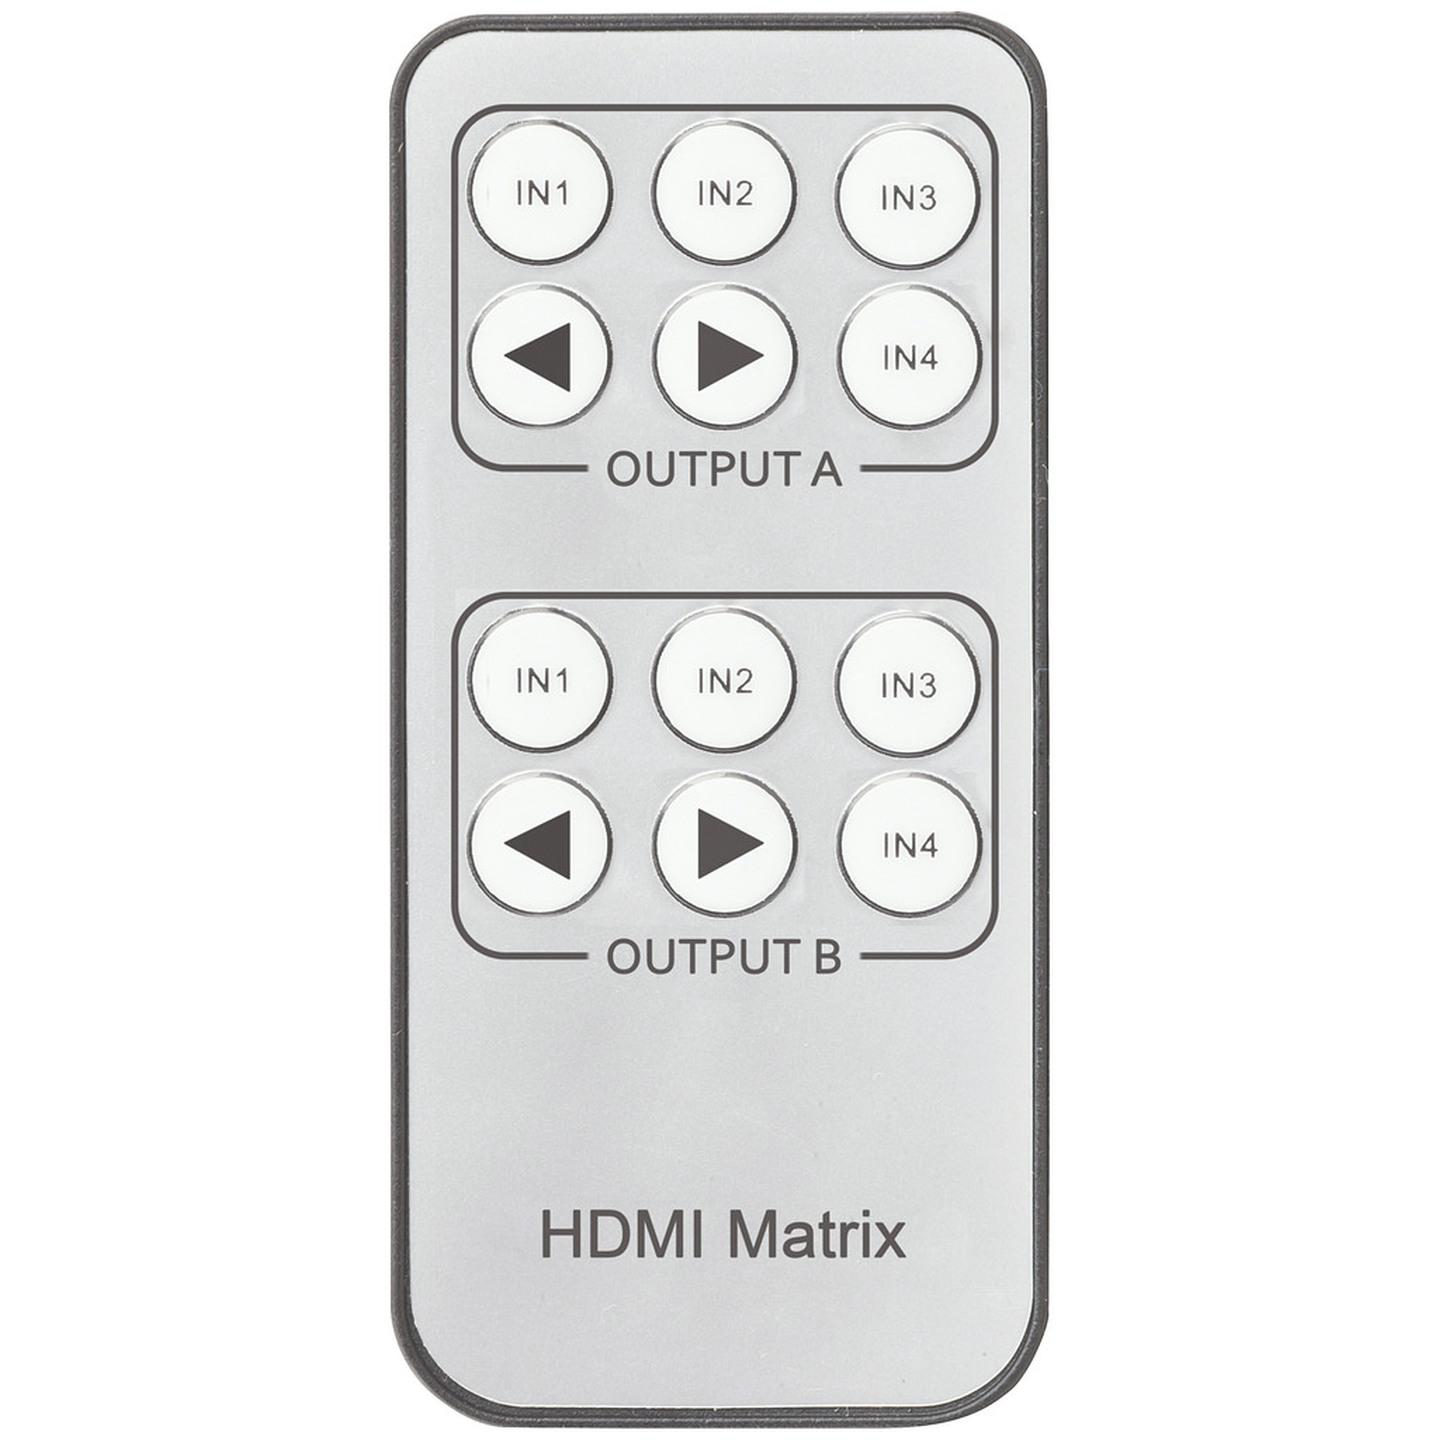 HDMI 4 X 2 Matrix Switcher Splitter with UHD 4K Support